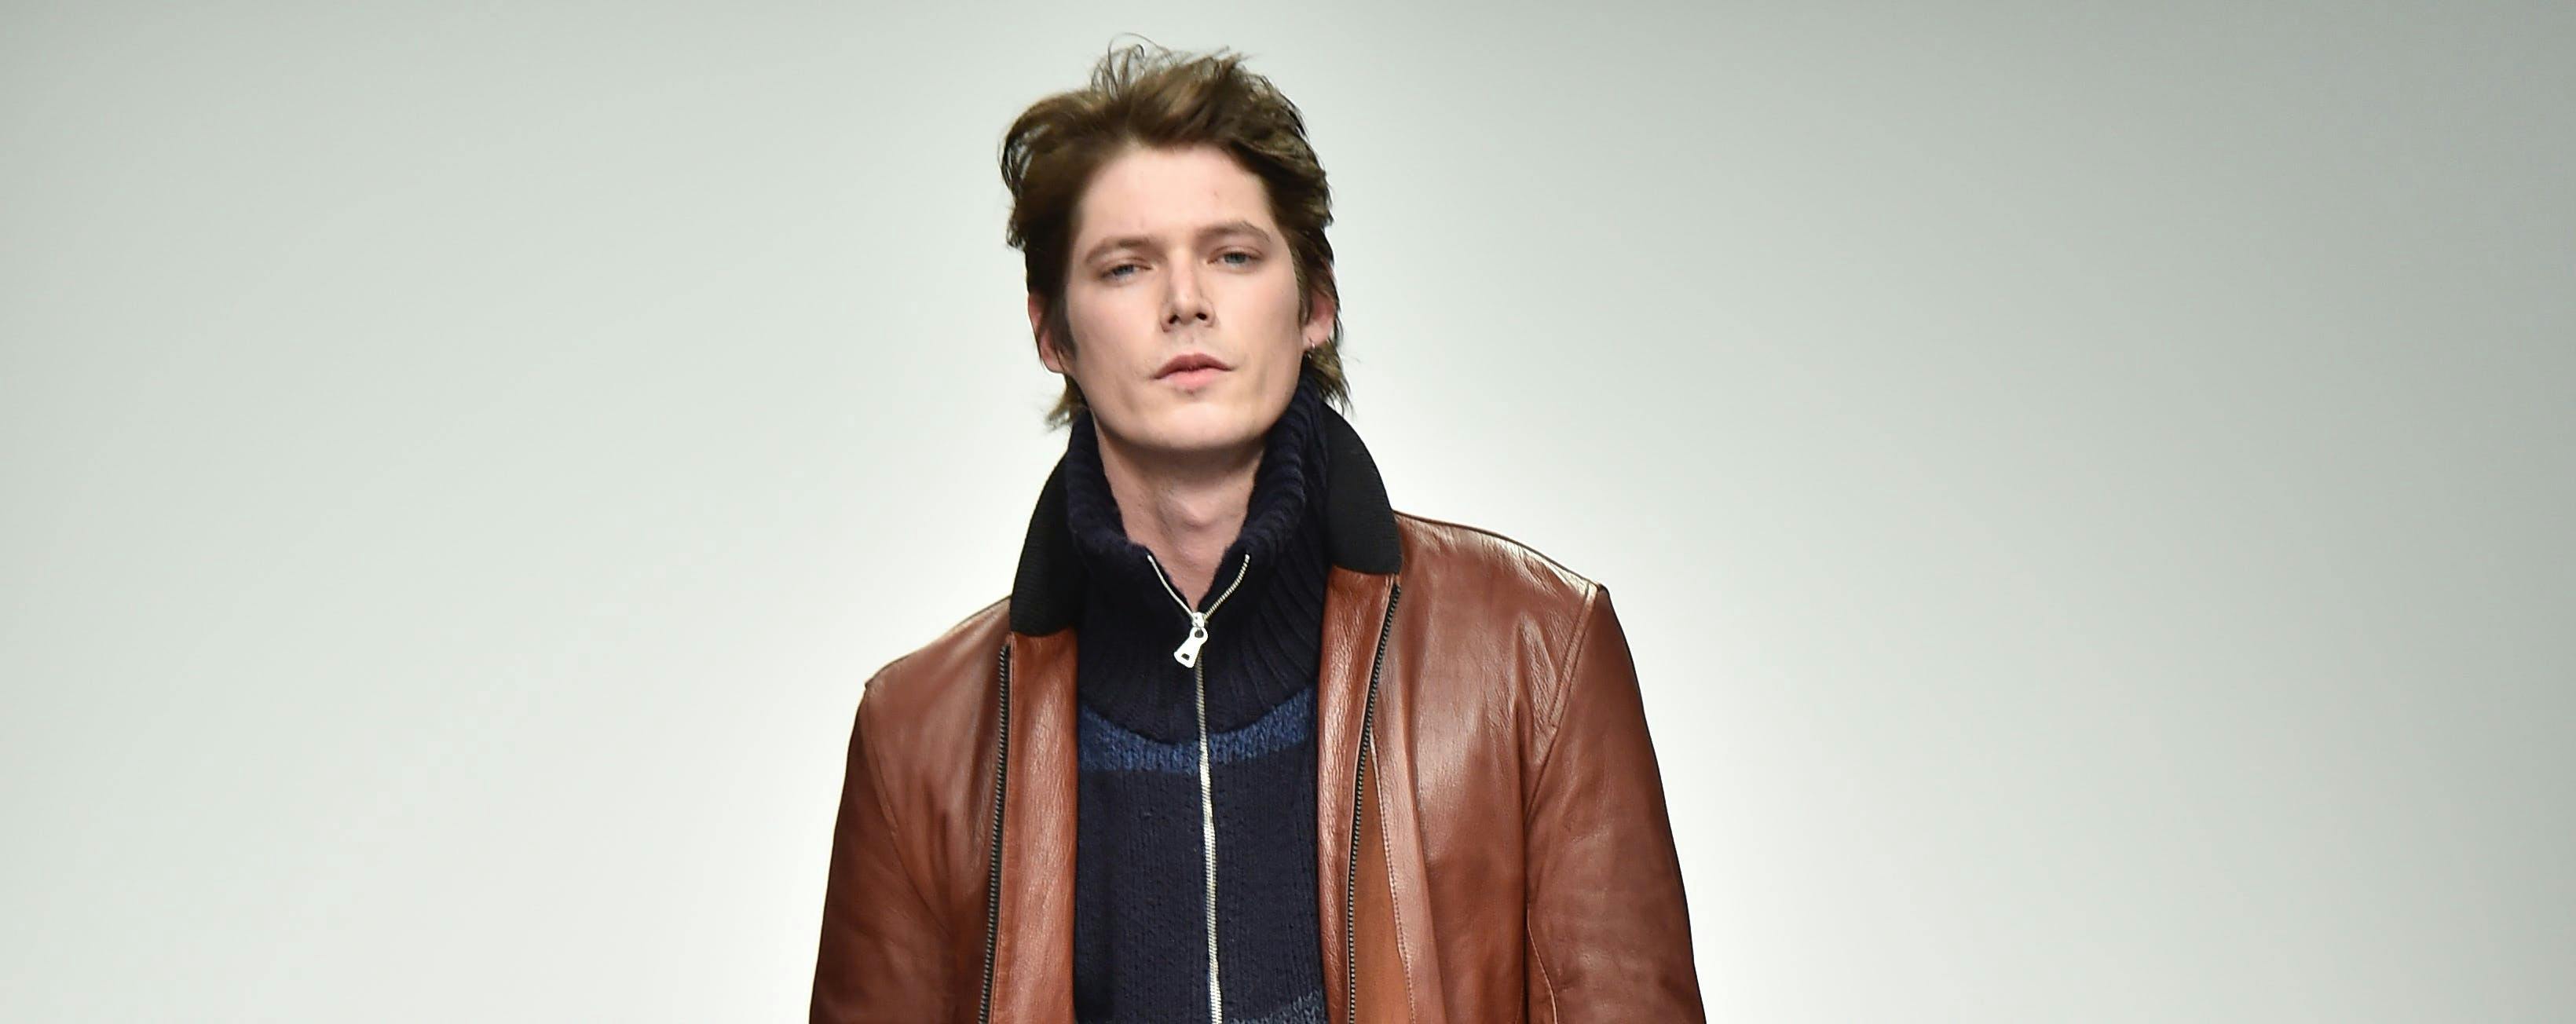 clothing apparel jacket coat leather jacket person human